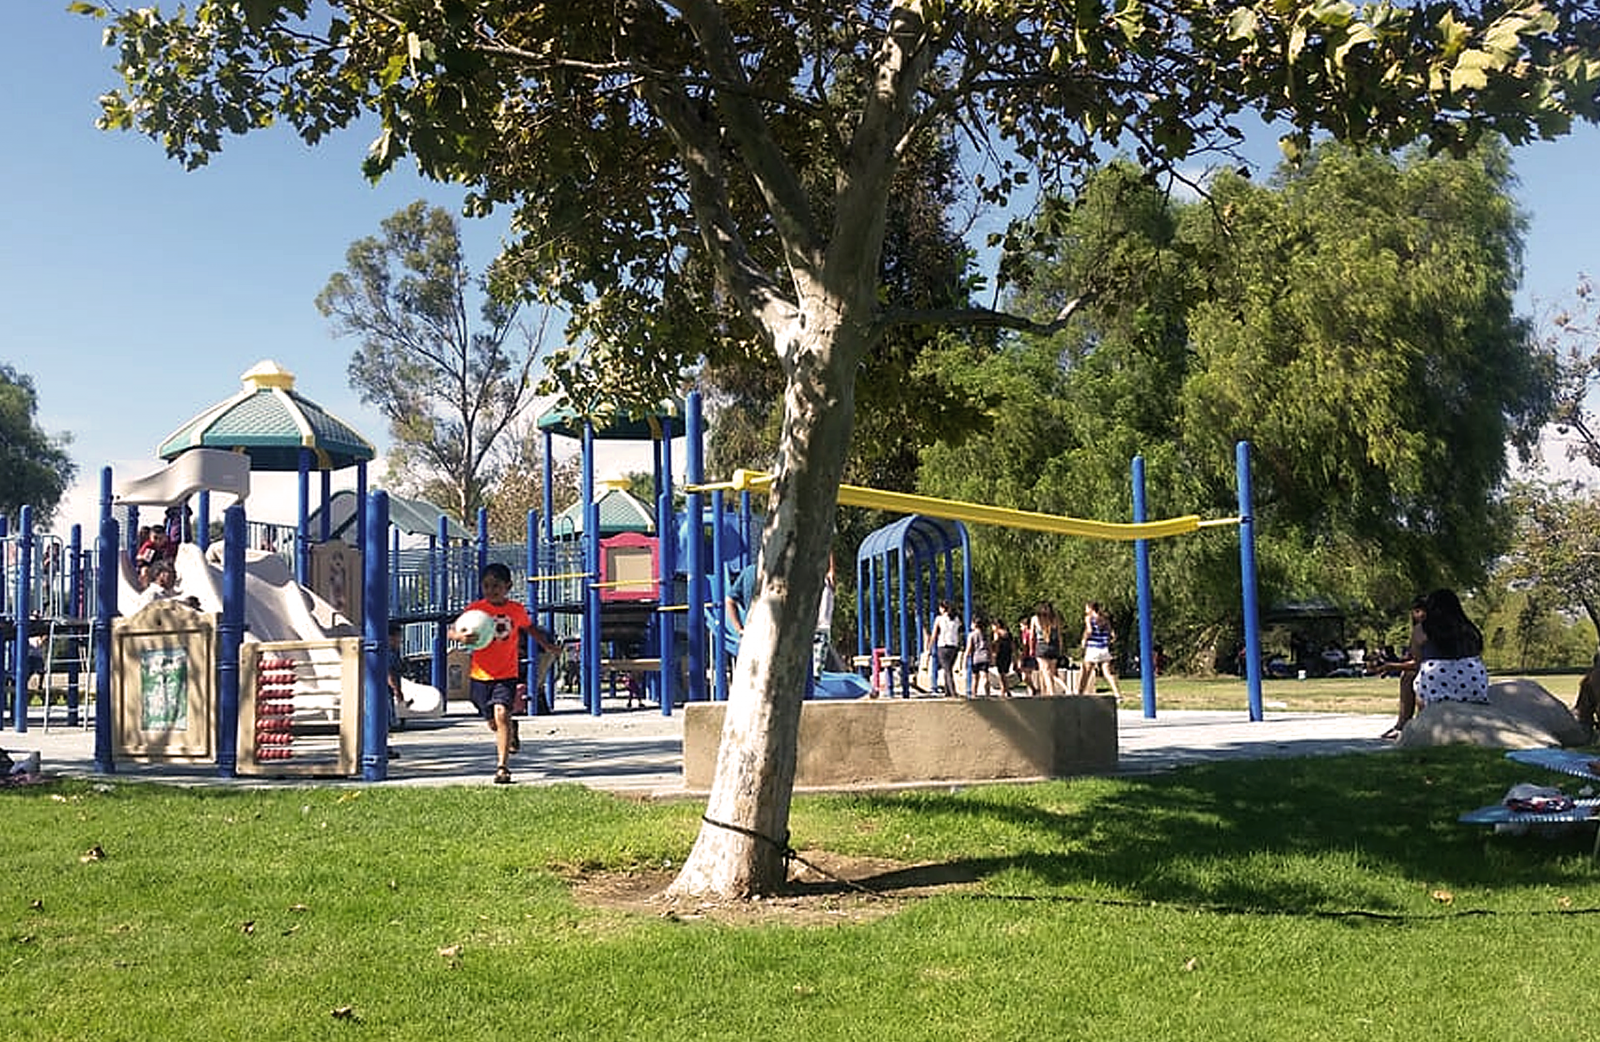 Children playing at Prado park playground.